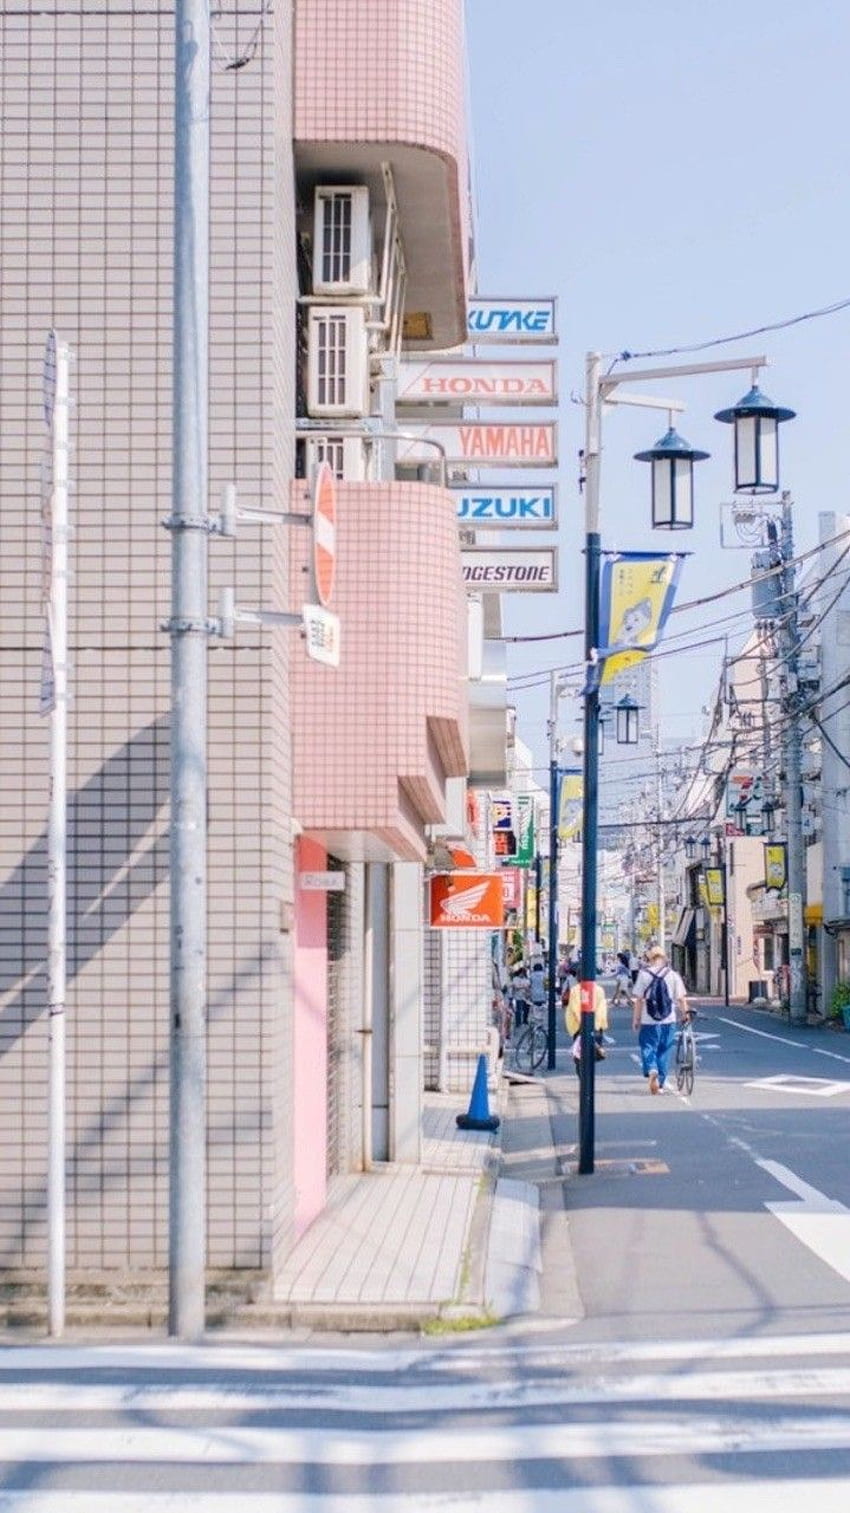 Vacation & Travel 에 있는 Quinny 님의 핀. 거리사진, 도쿄 일본, 배경, Estetika Jepang wallpaper ponsel HD